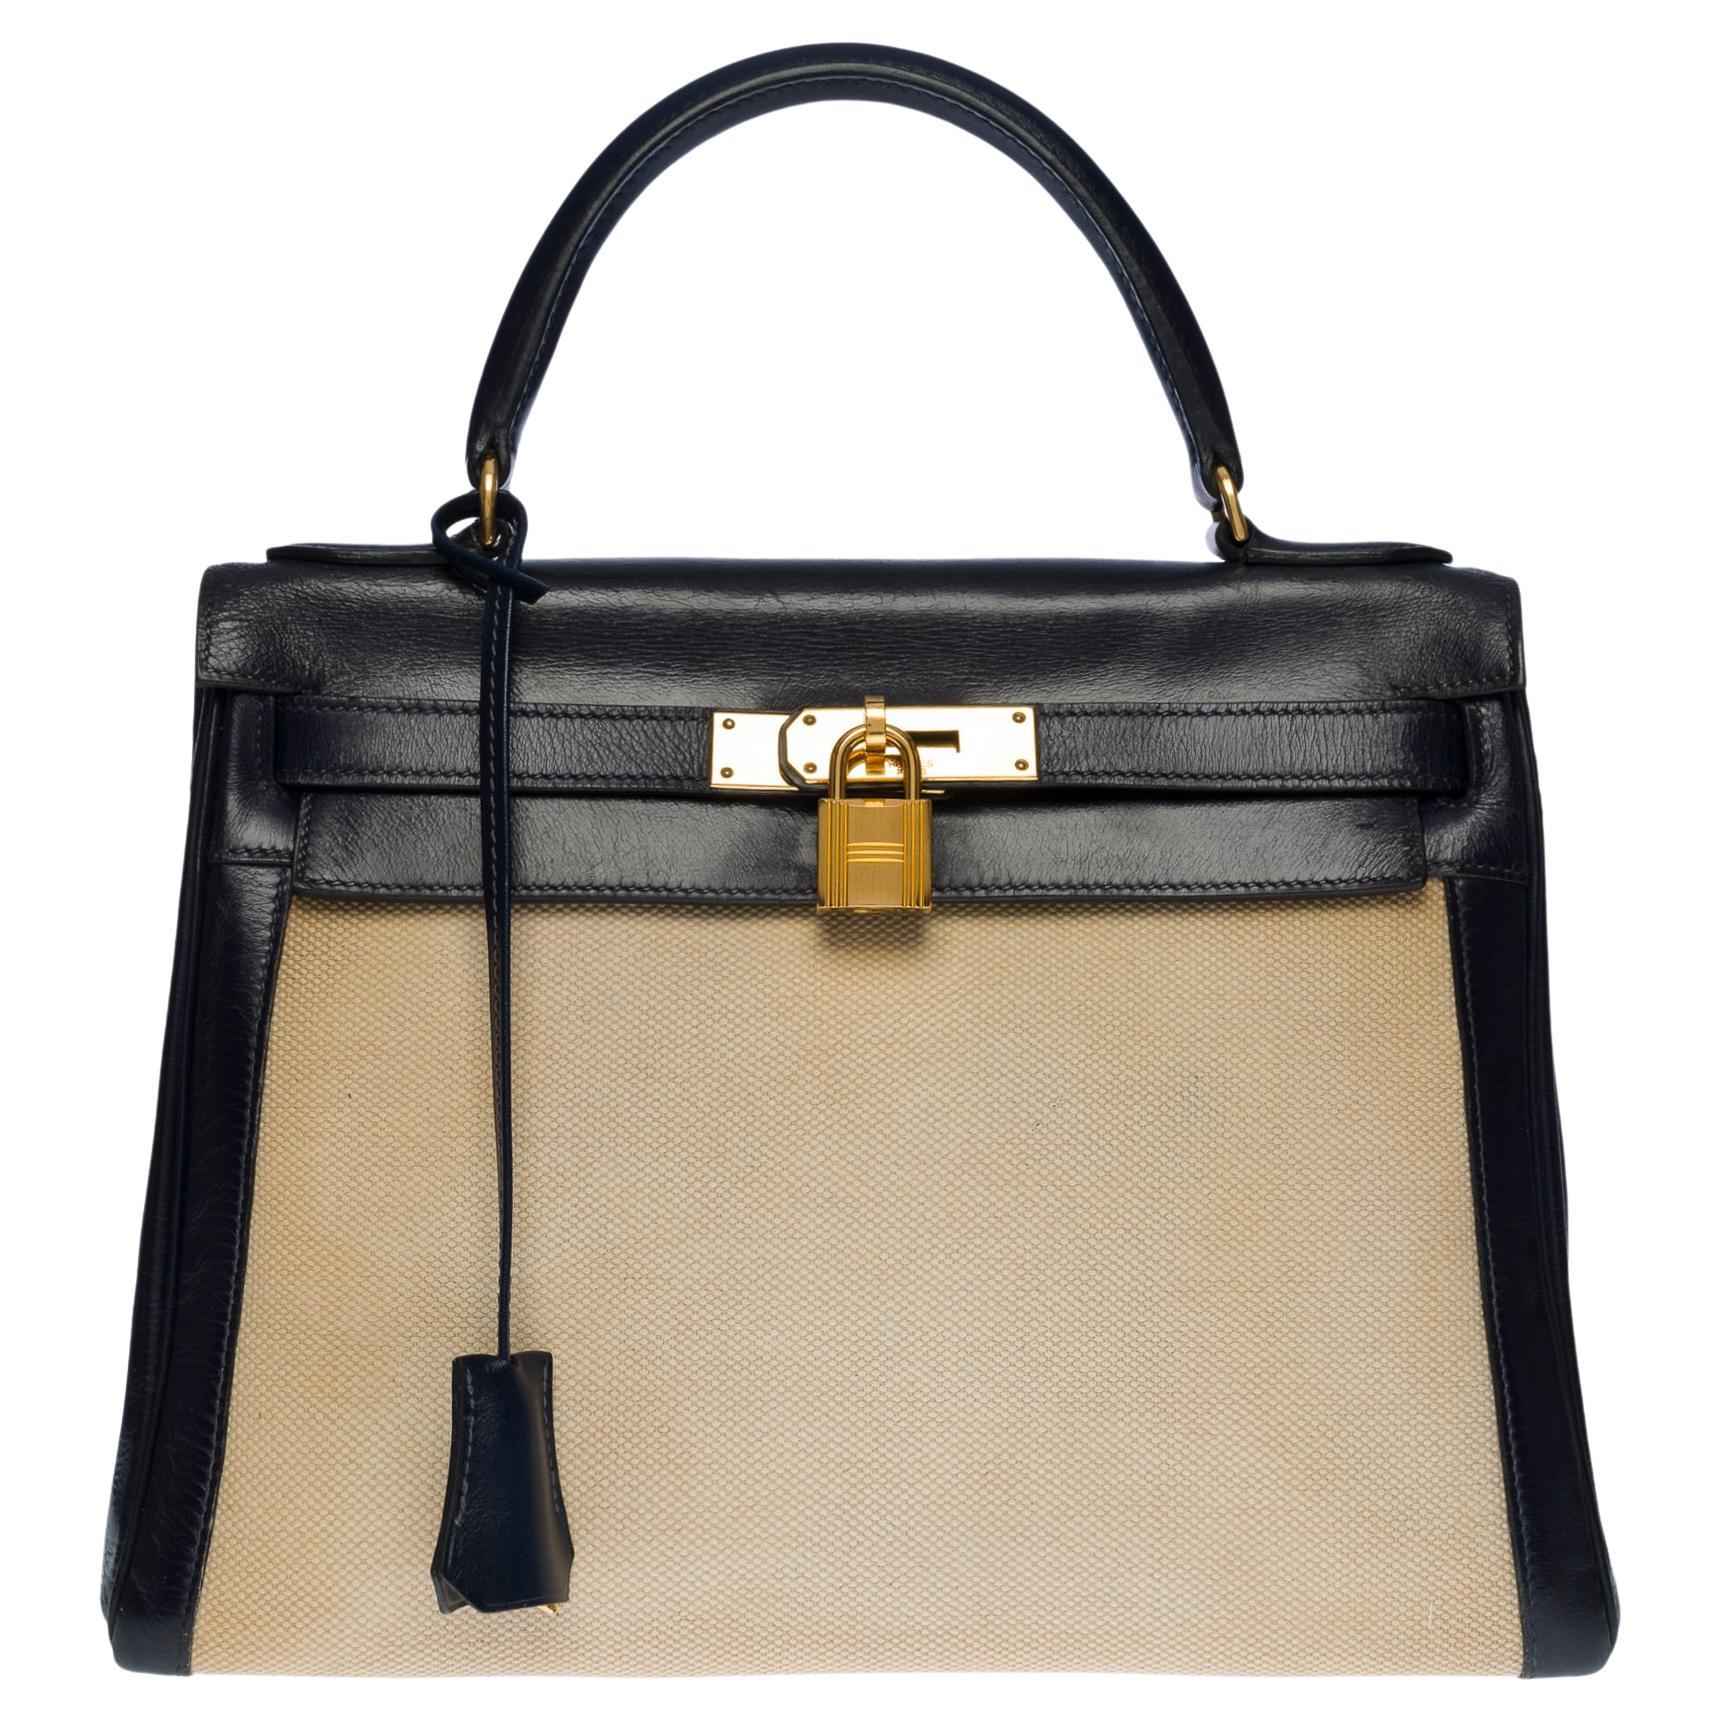 Hermes Canvas Handbag - 88 For Sale on 1stDibs